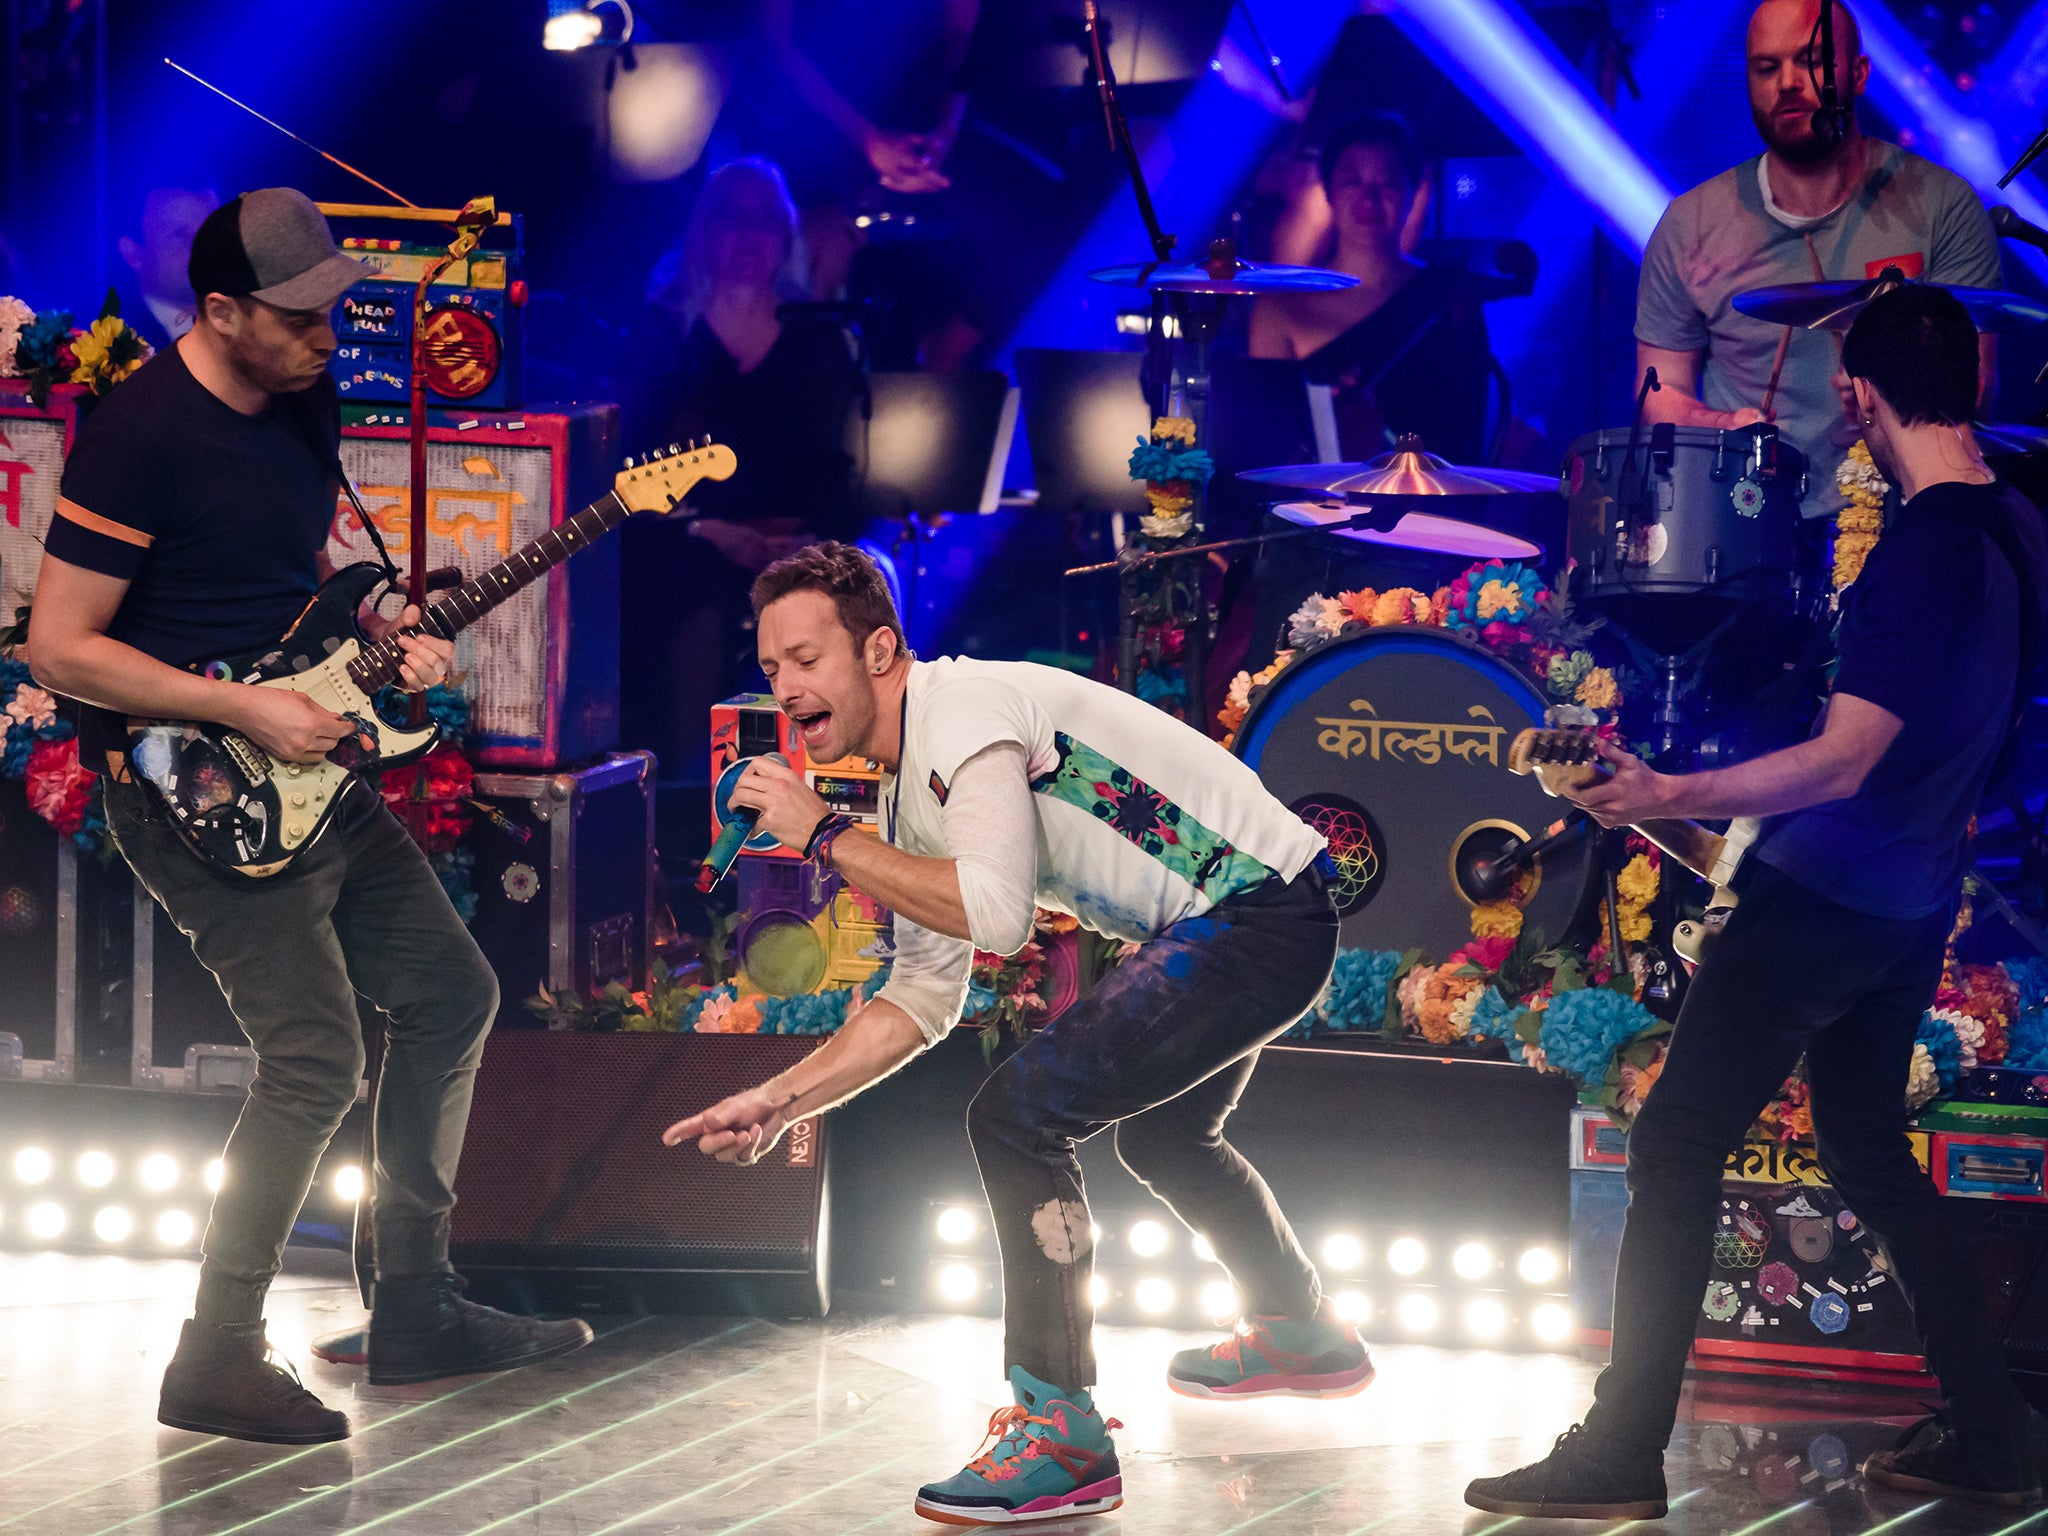 Coldplay are set to headline 2016's Glastonbury festival